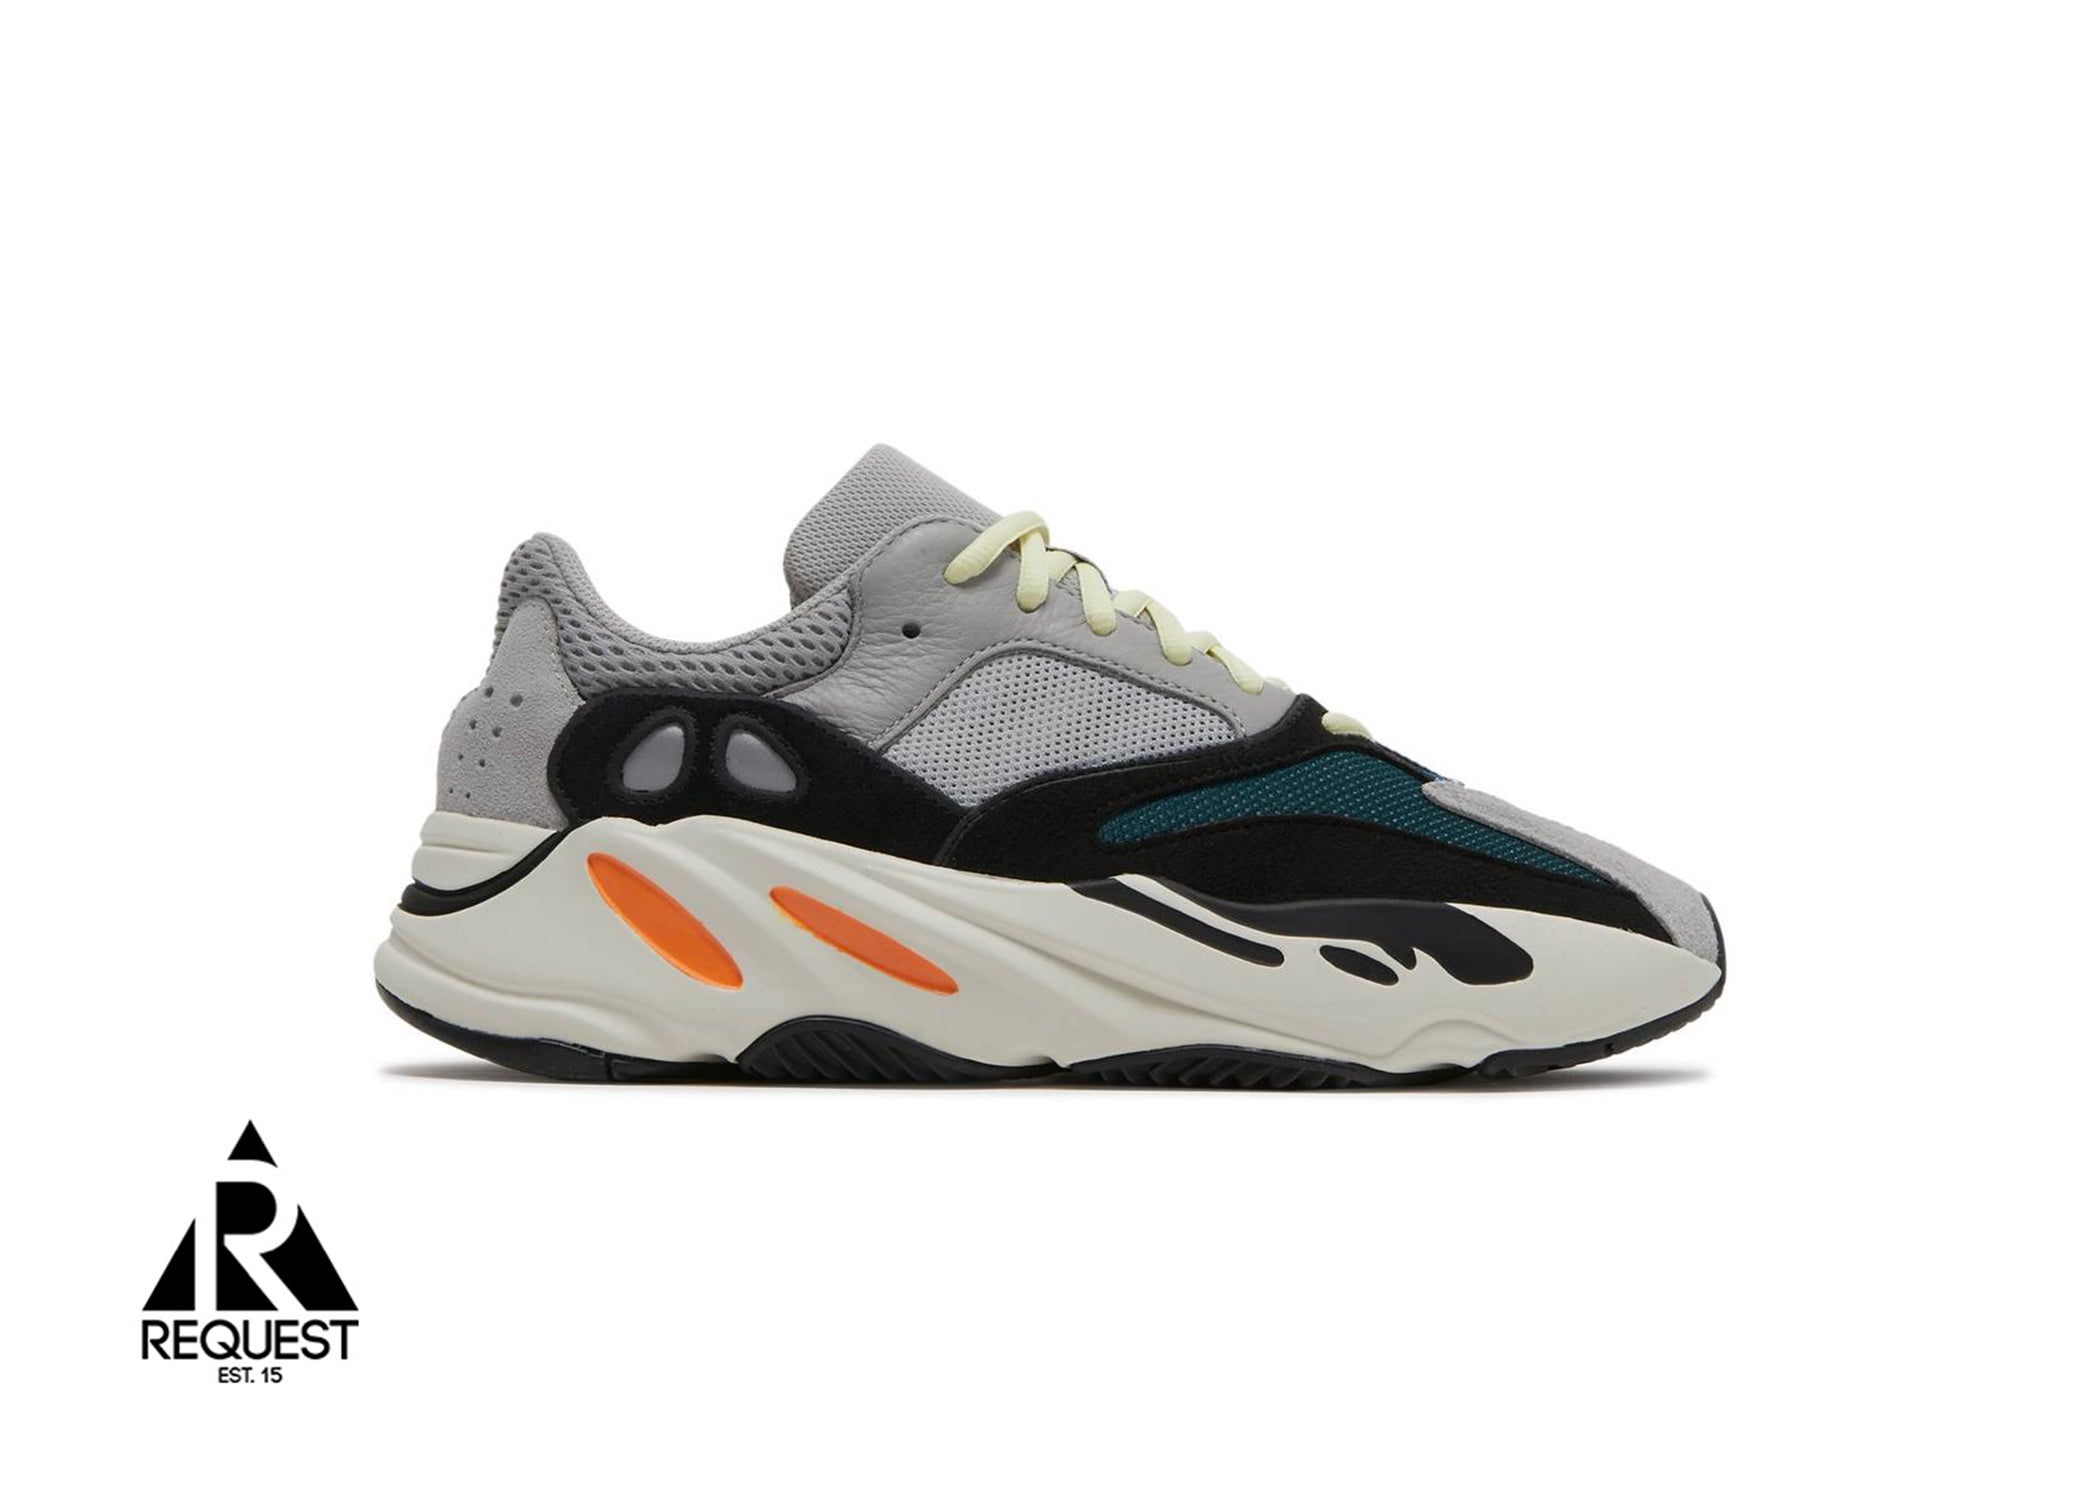 Adidas Yeezy Boost 700 “Wave Runner OG” | Request